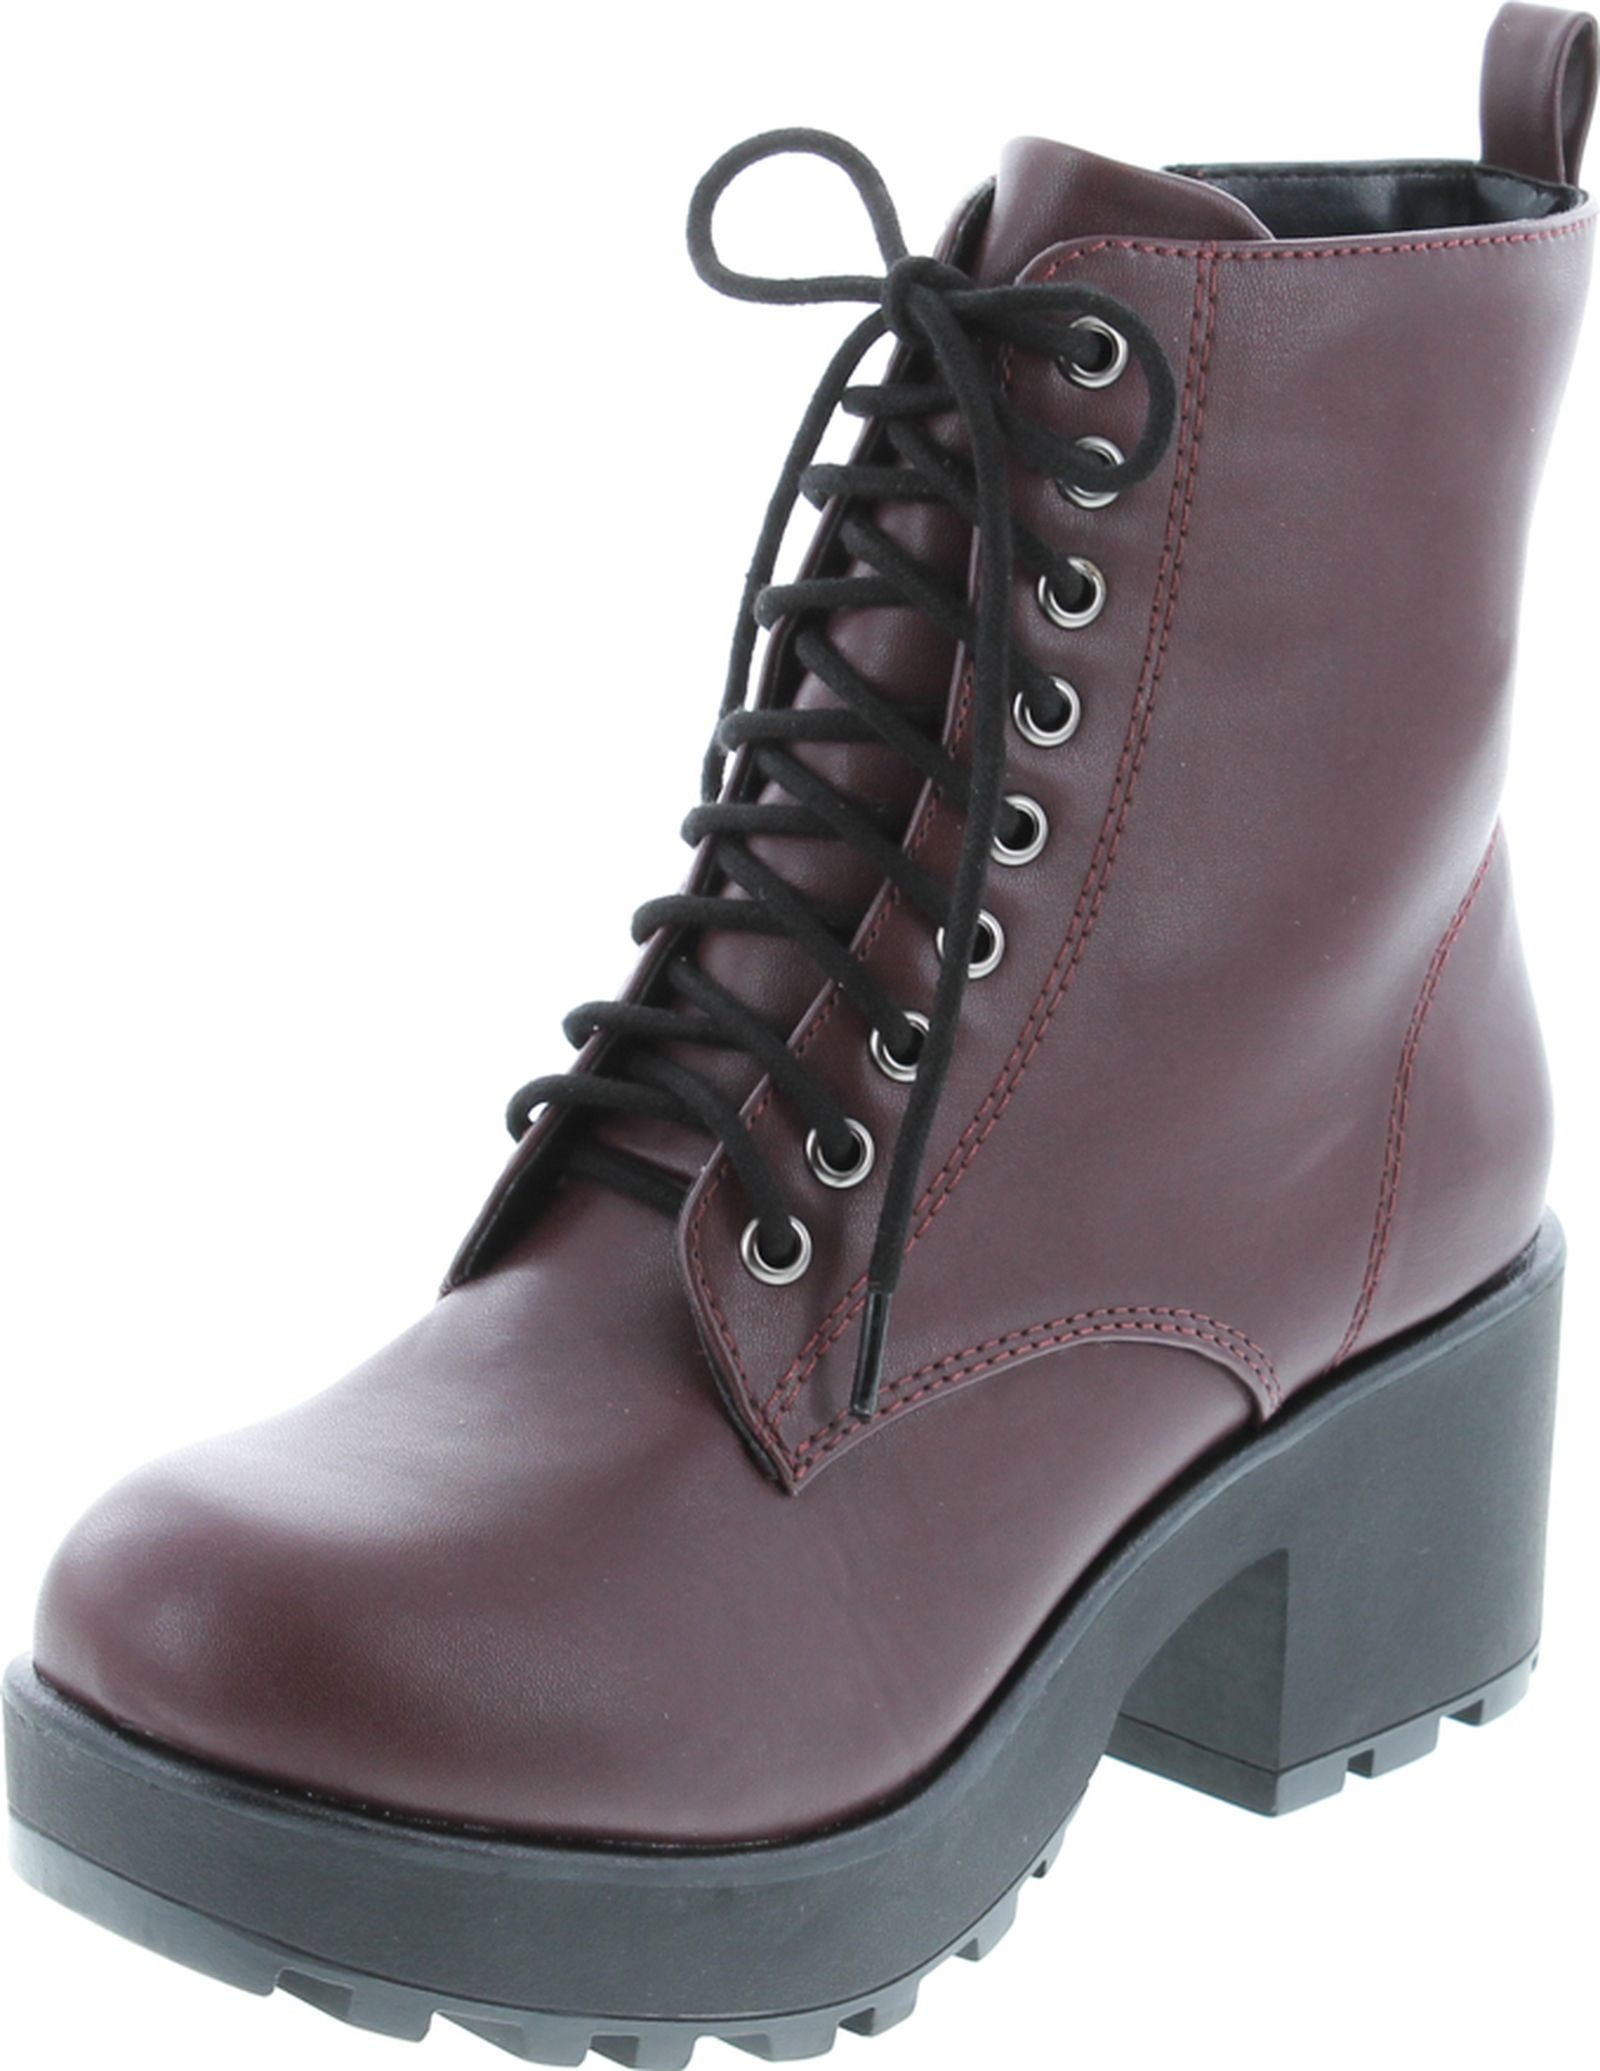  Soda Women's Nevitt Faux Leather Lace Up Chunky Heel Combat  Style Boots,Black,5.5